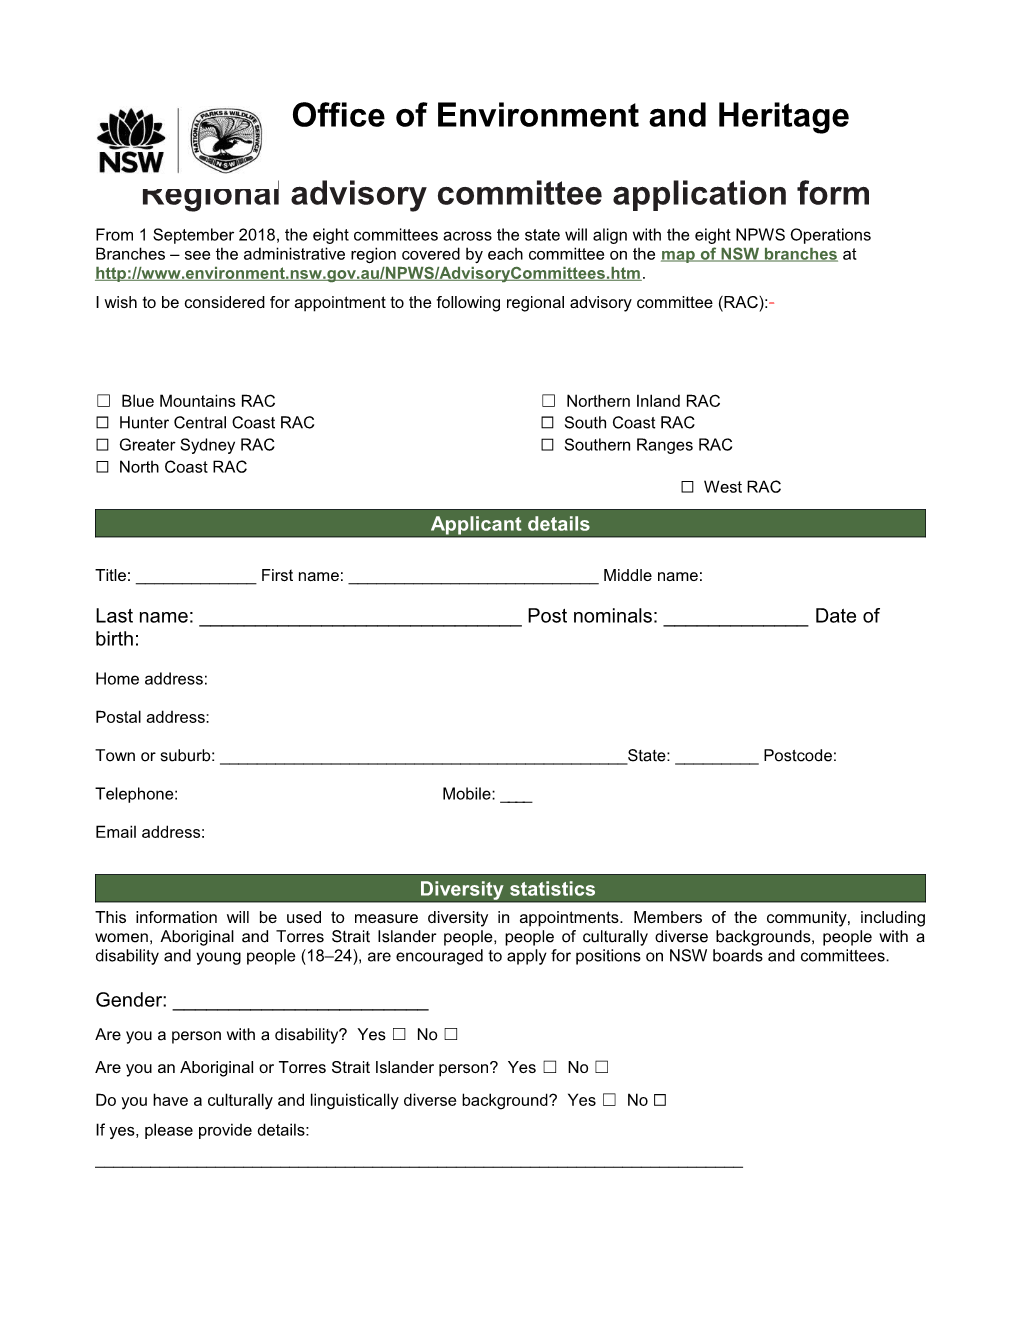 Regional Advisory Committee Application Form